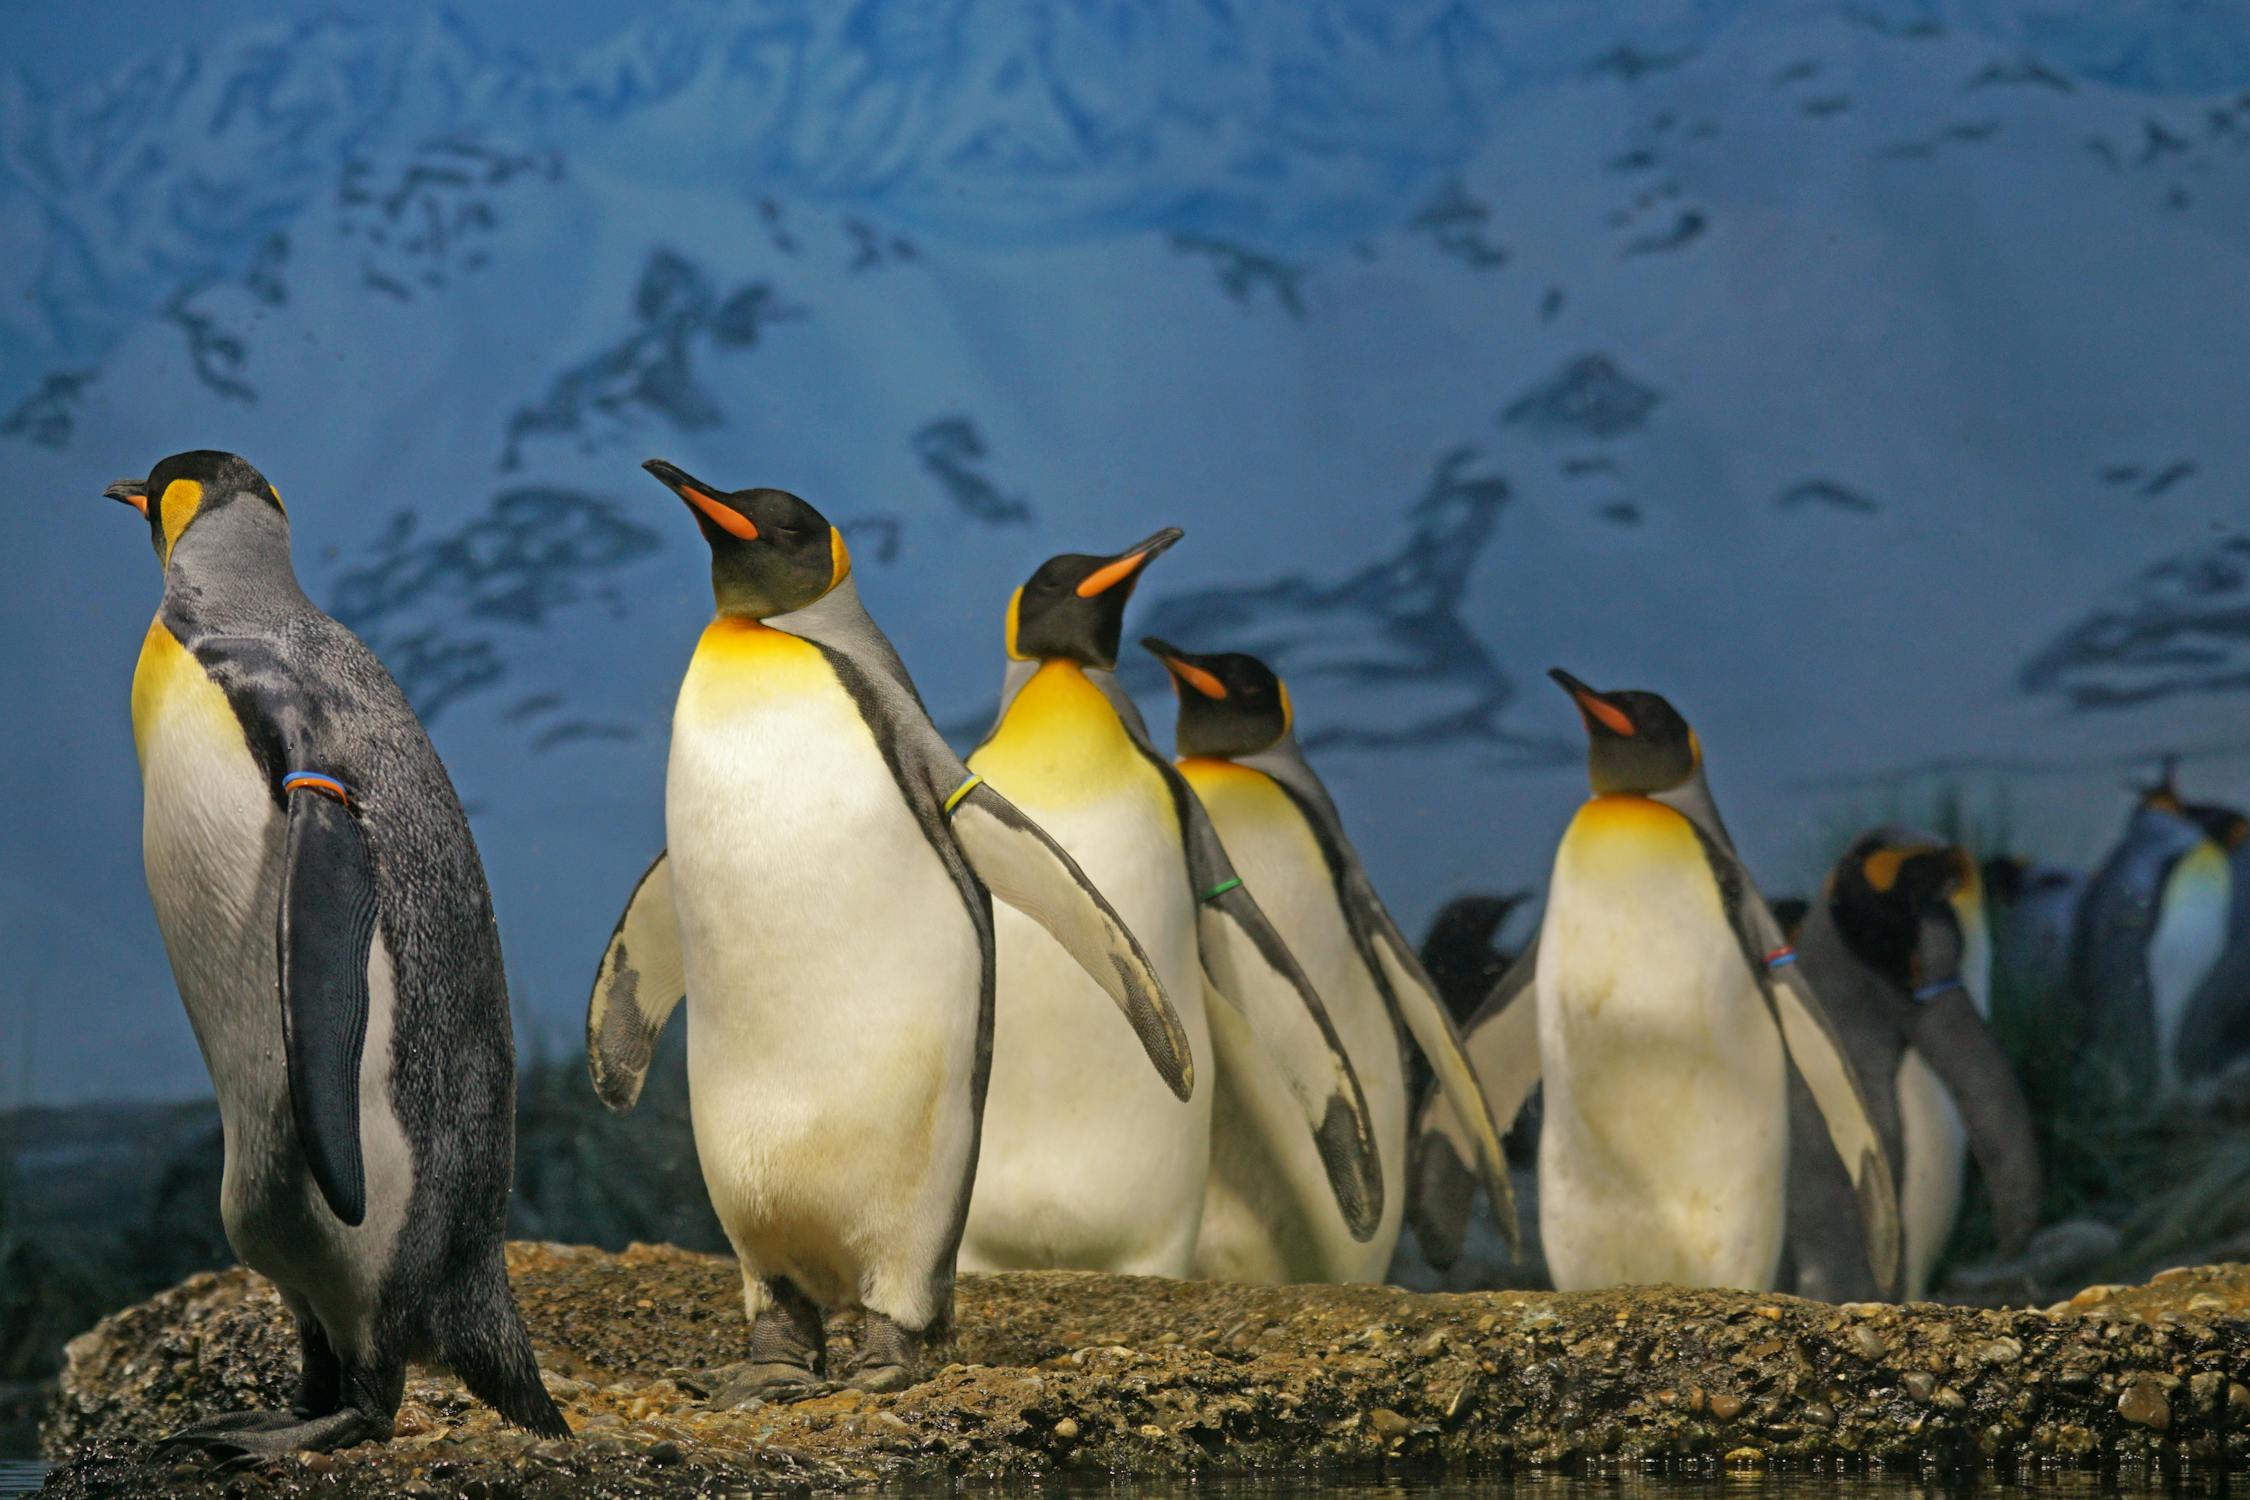 Penguin Photo by Pixabay from Pexels: https://www.pexels.com/photo/animal-beaks-bird-cold-209096/